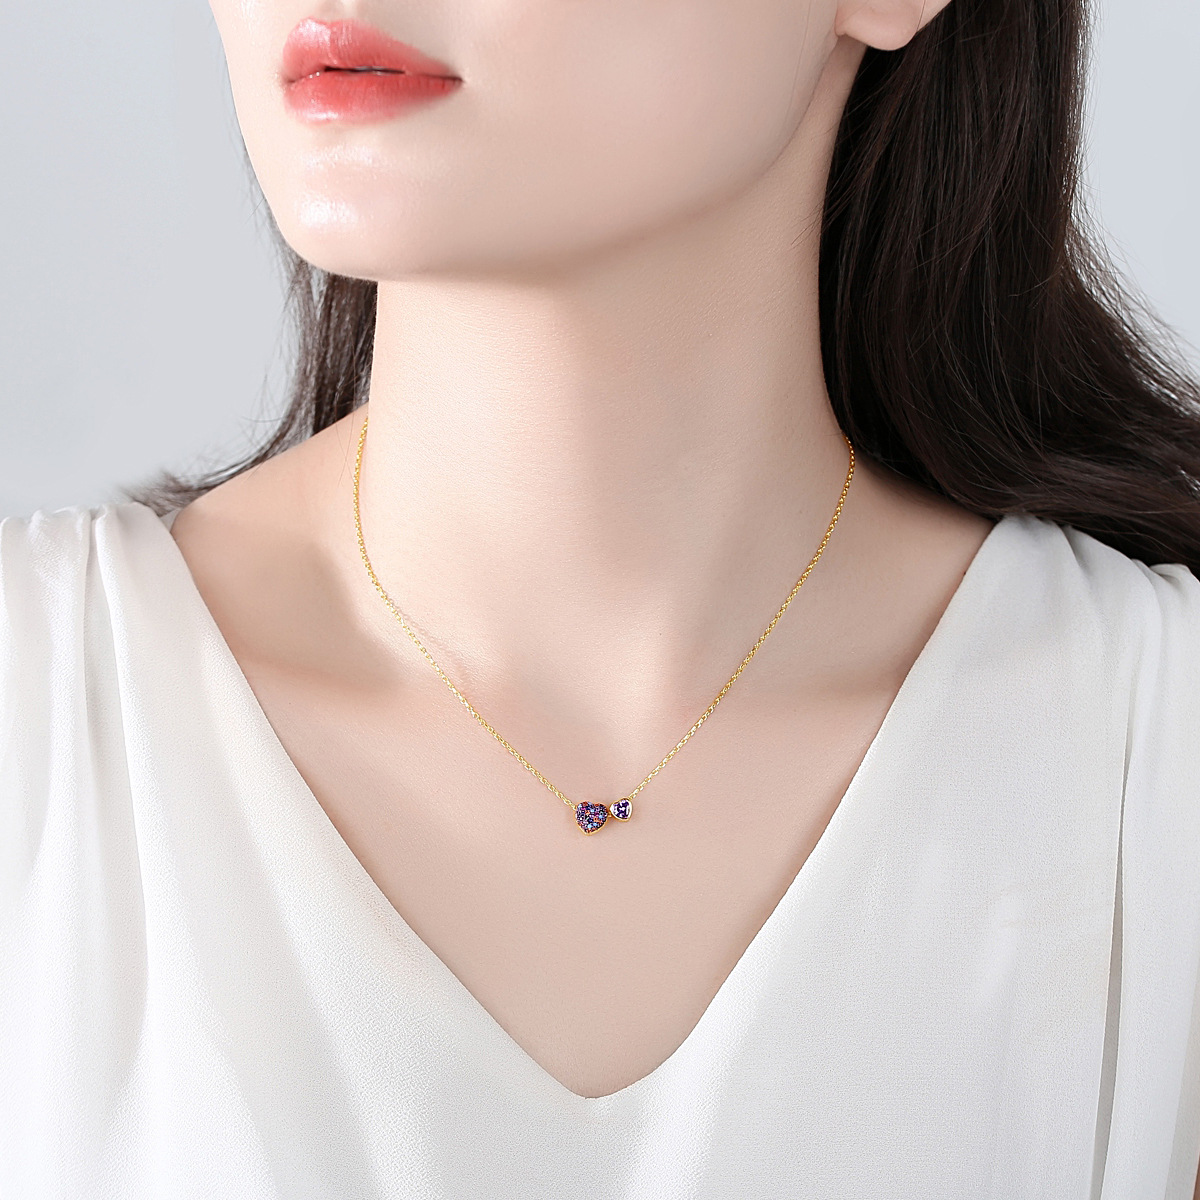 Pendant heart Korean style fashion necklace for women